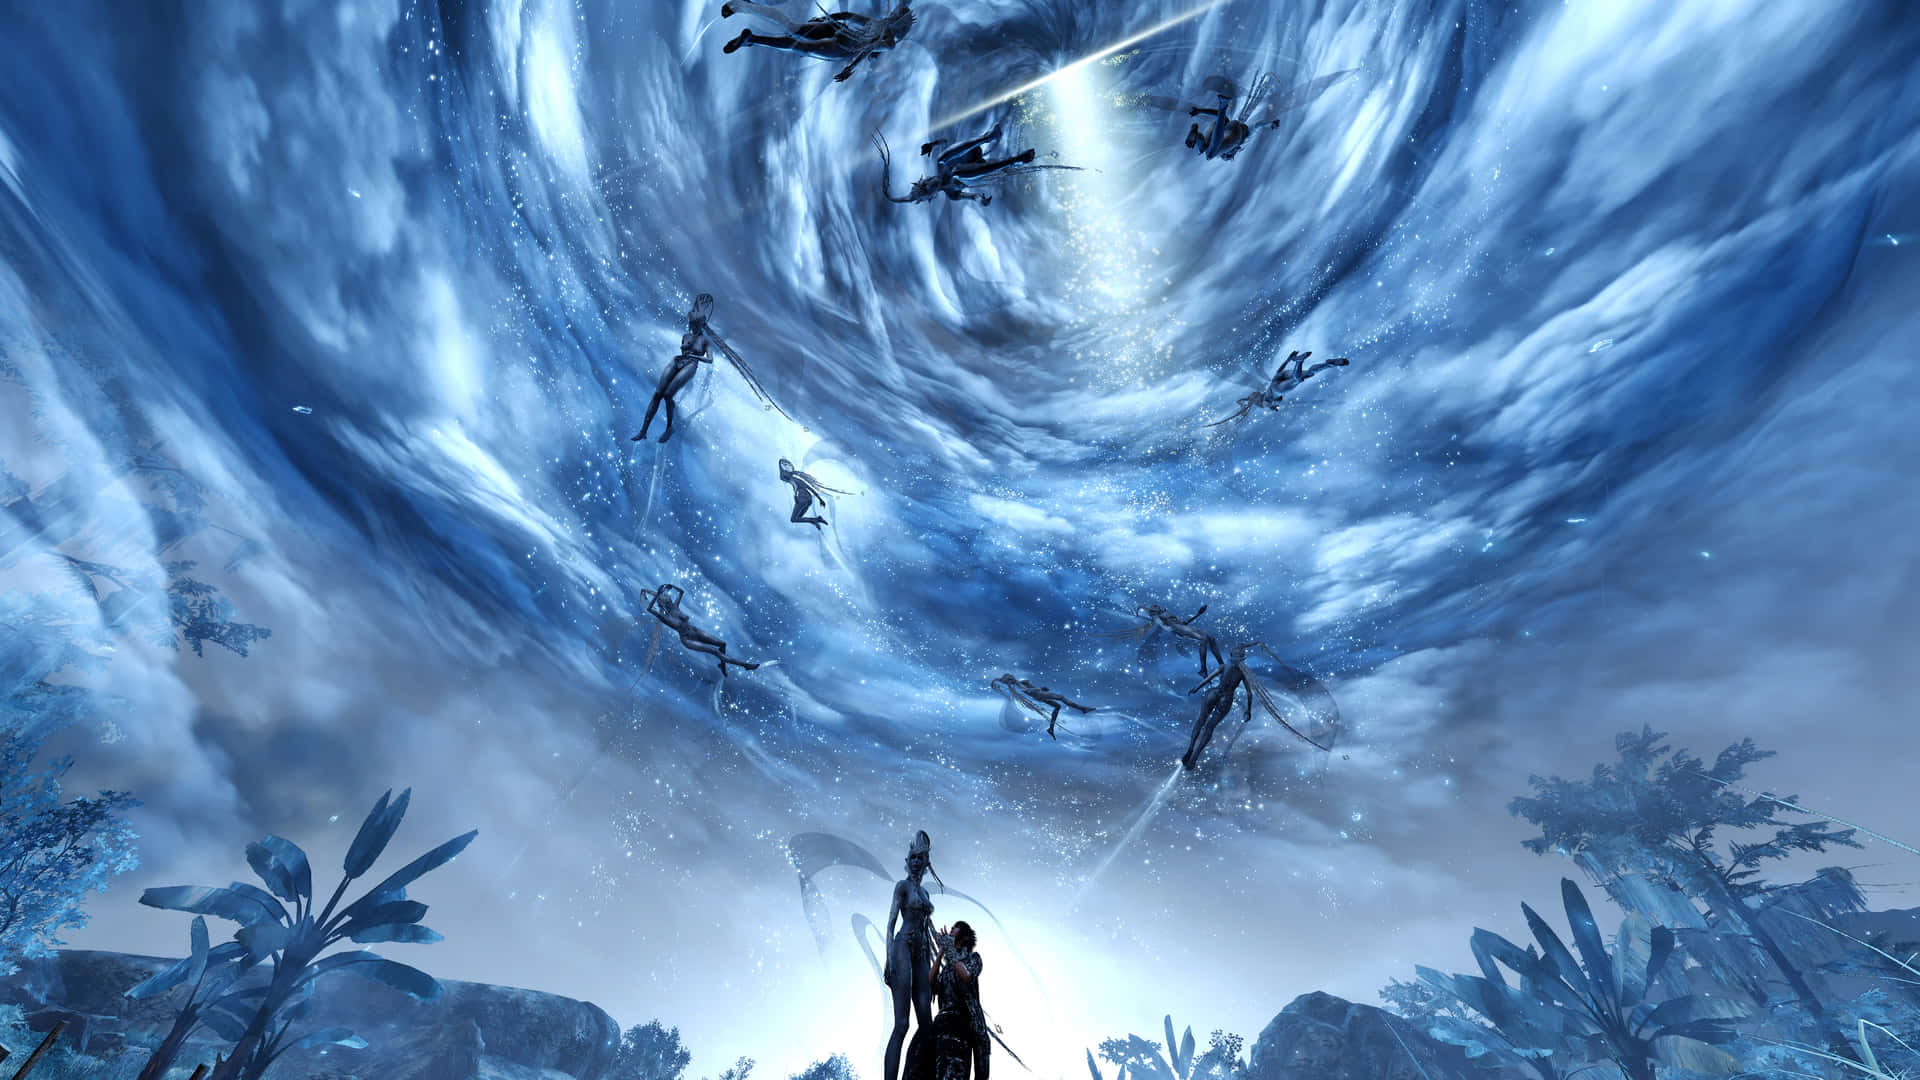 Final Fantasy Xv Snowfields With Tornado Background